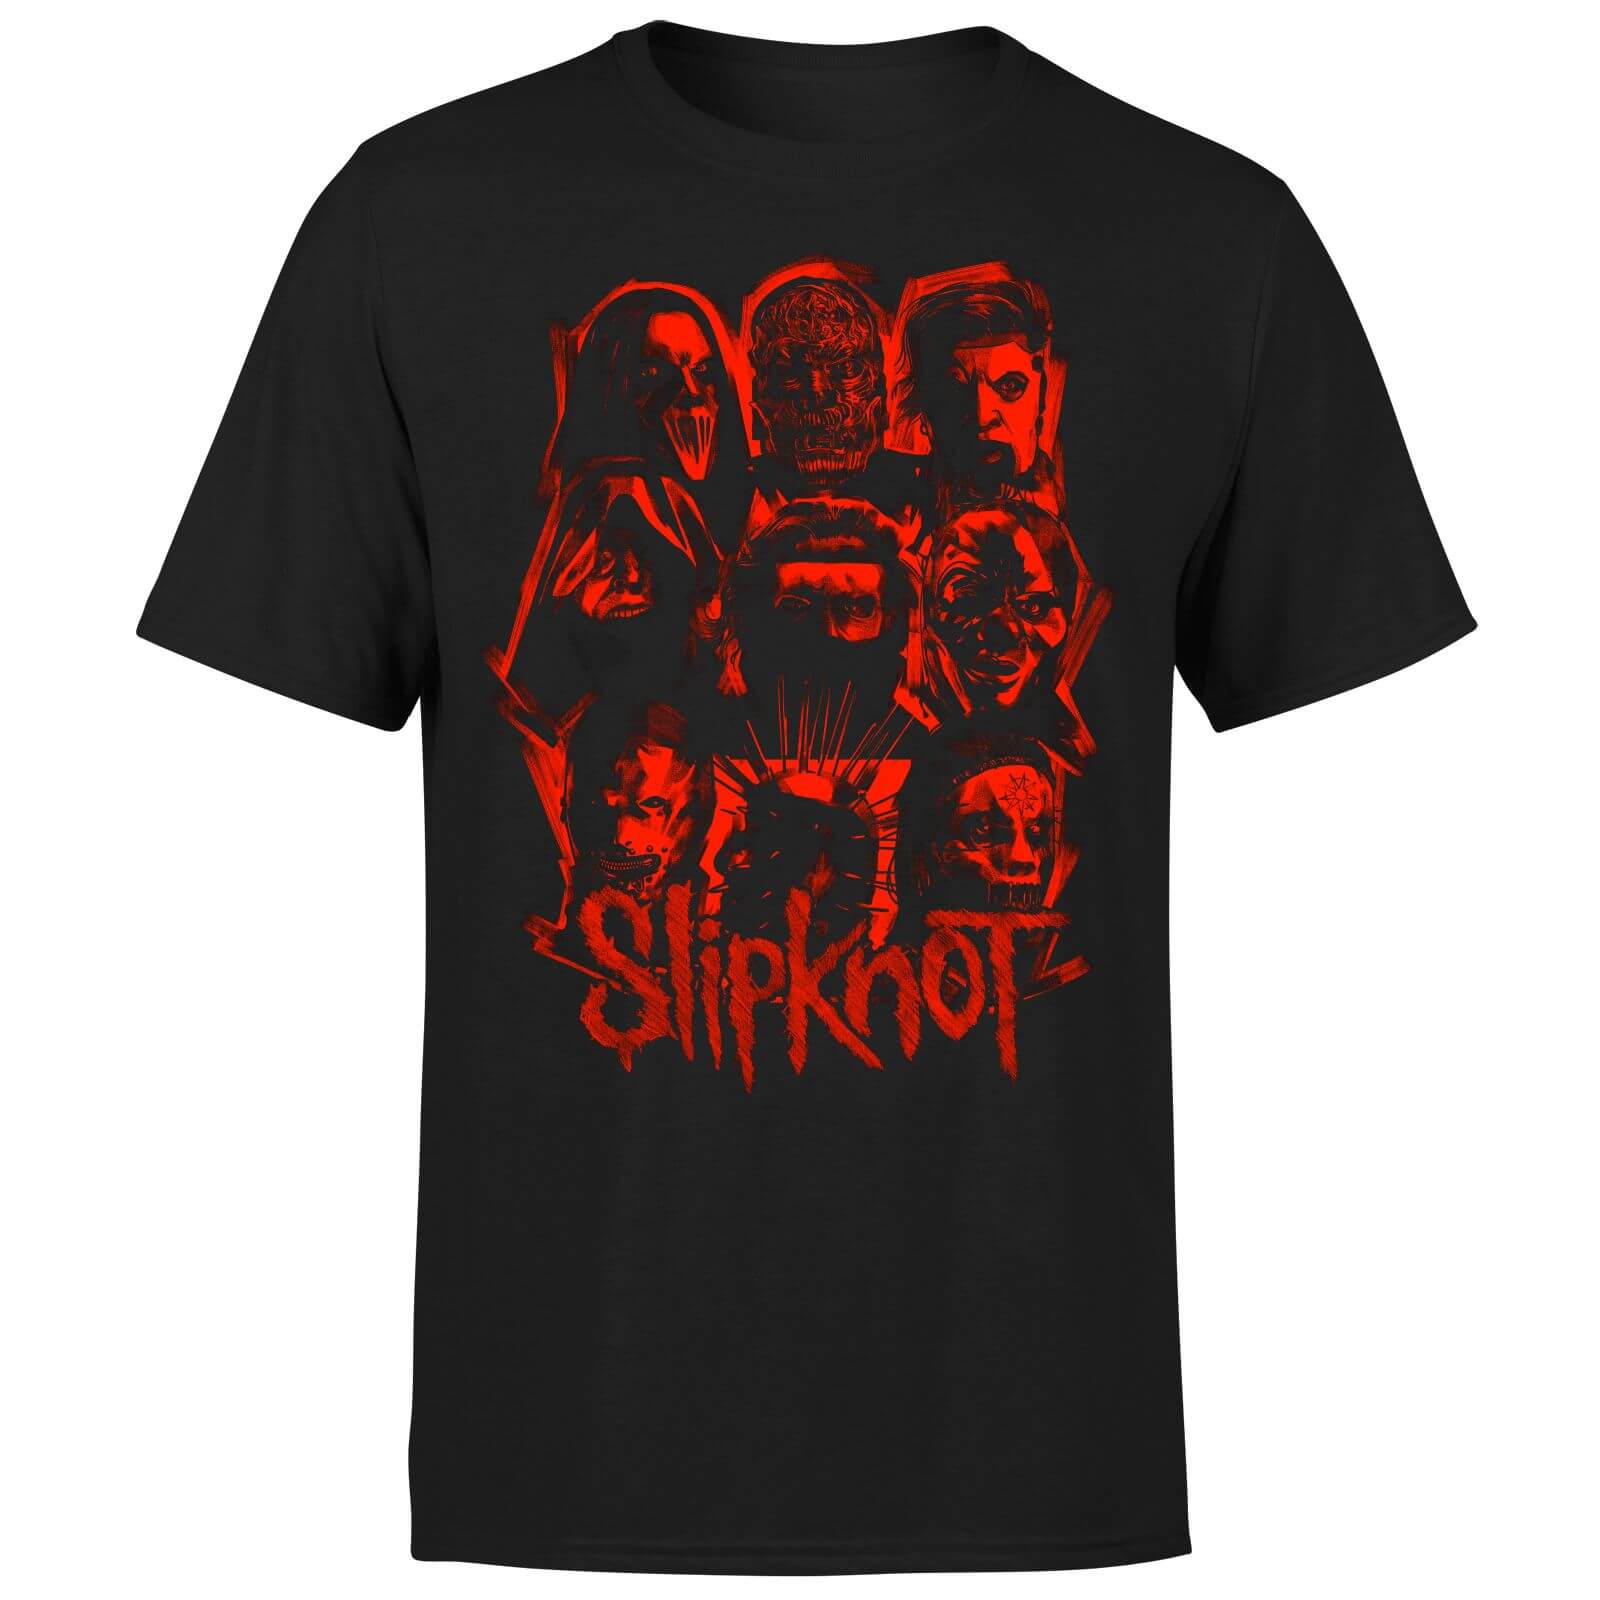 Slipknot Patch T-Shirt - Black - M - Black